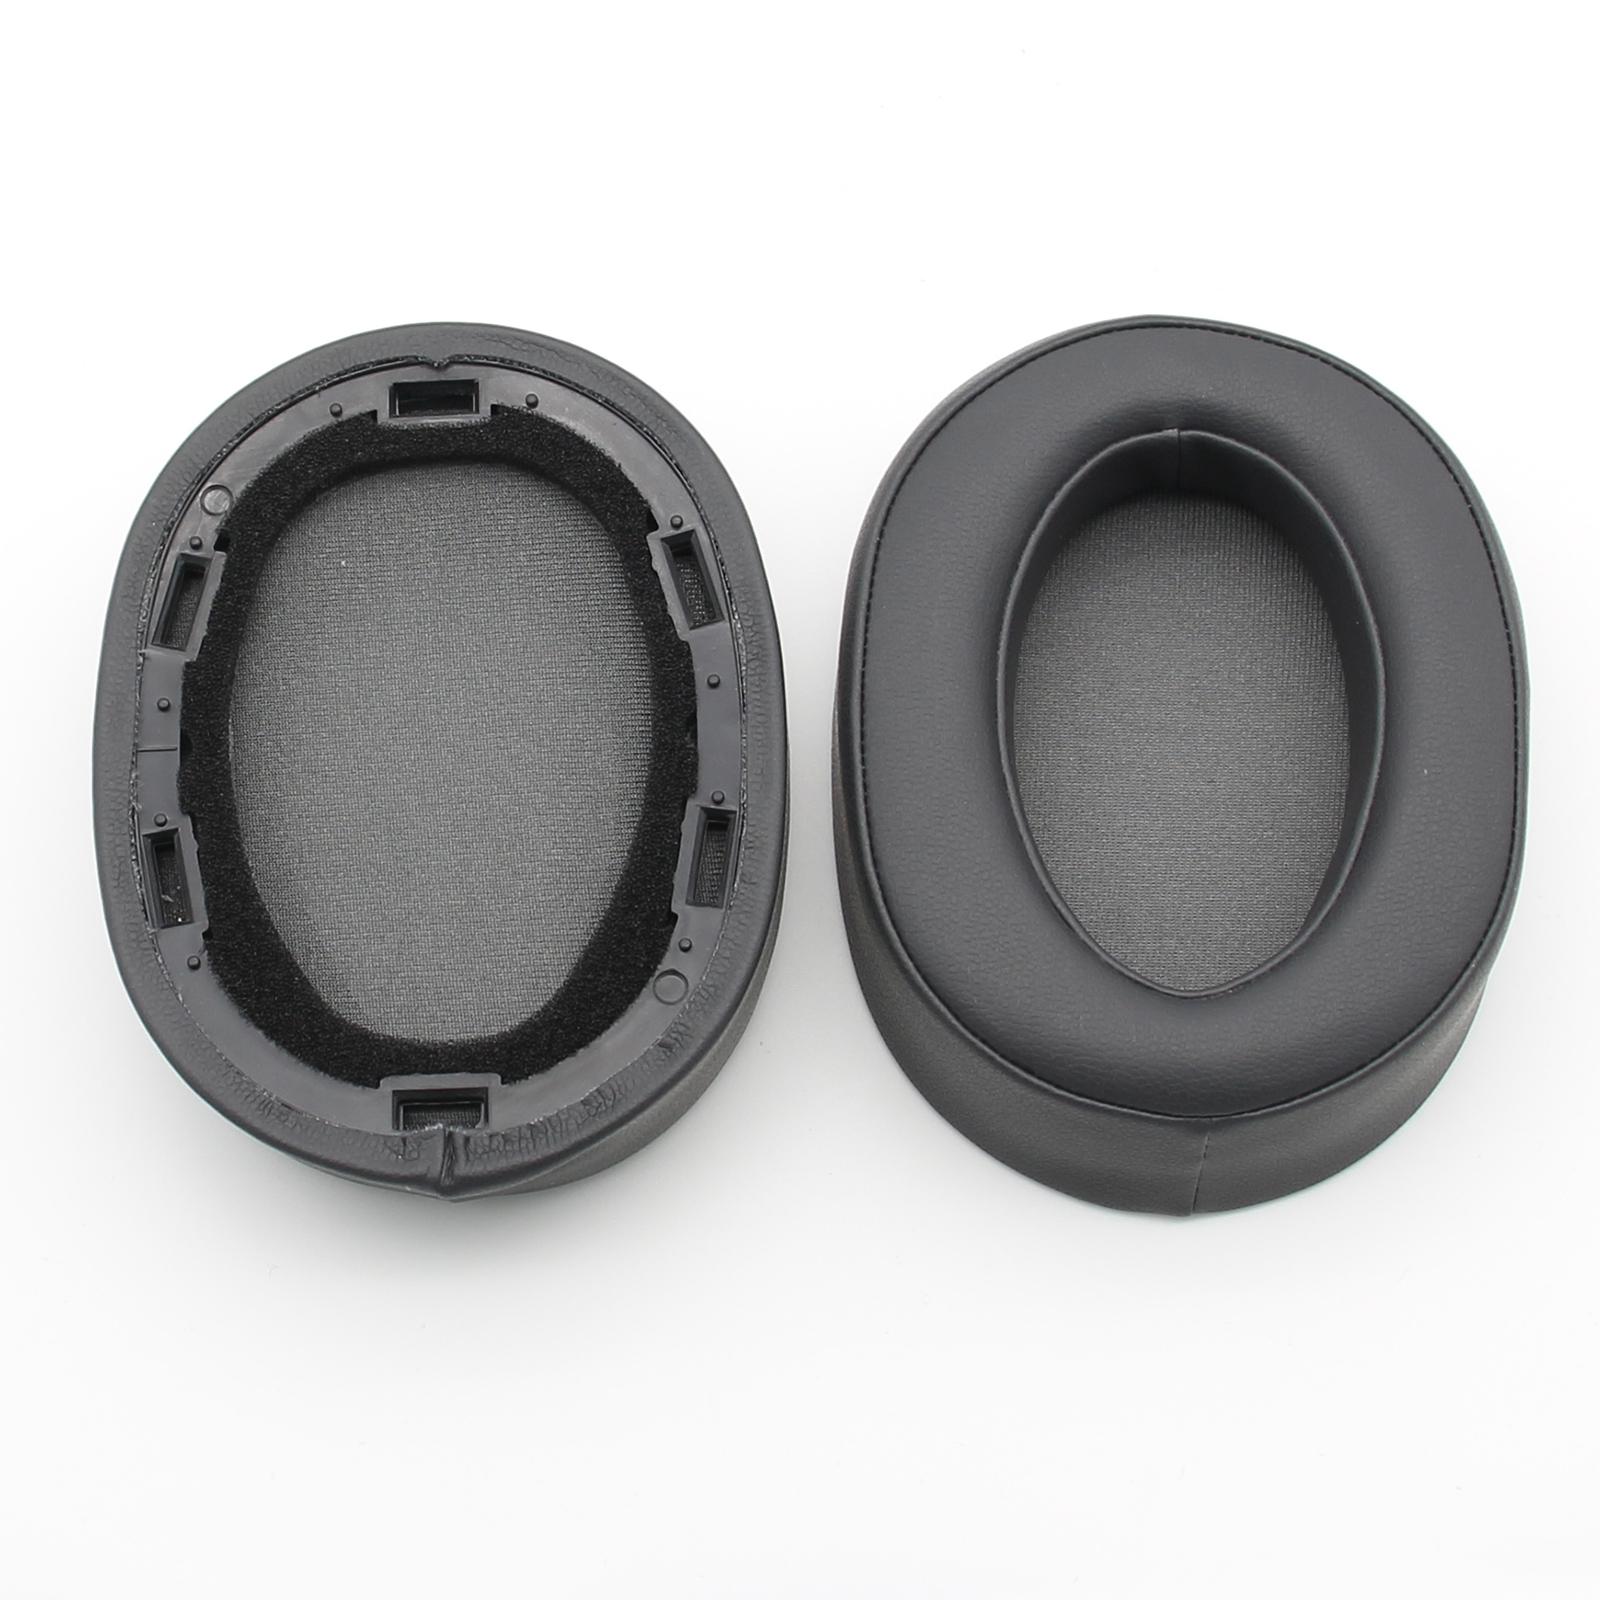 INF Ohrpolster für Sony Ohrpolster passend Grau für: Kopfhörer Sony MDR-100ABN / WH-H900N